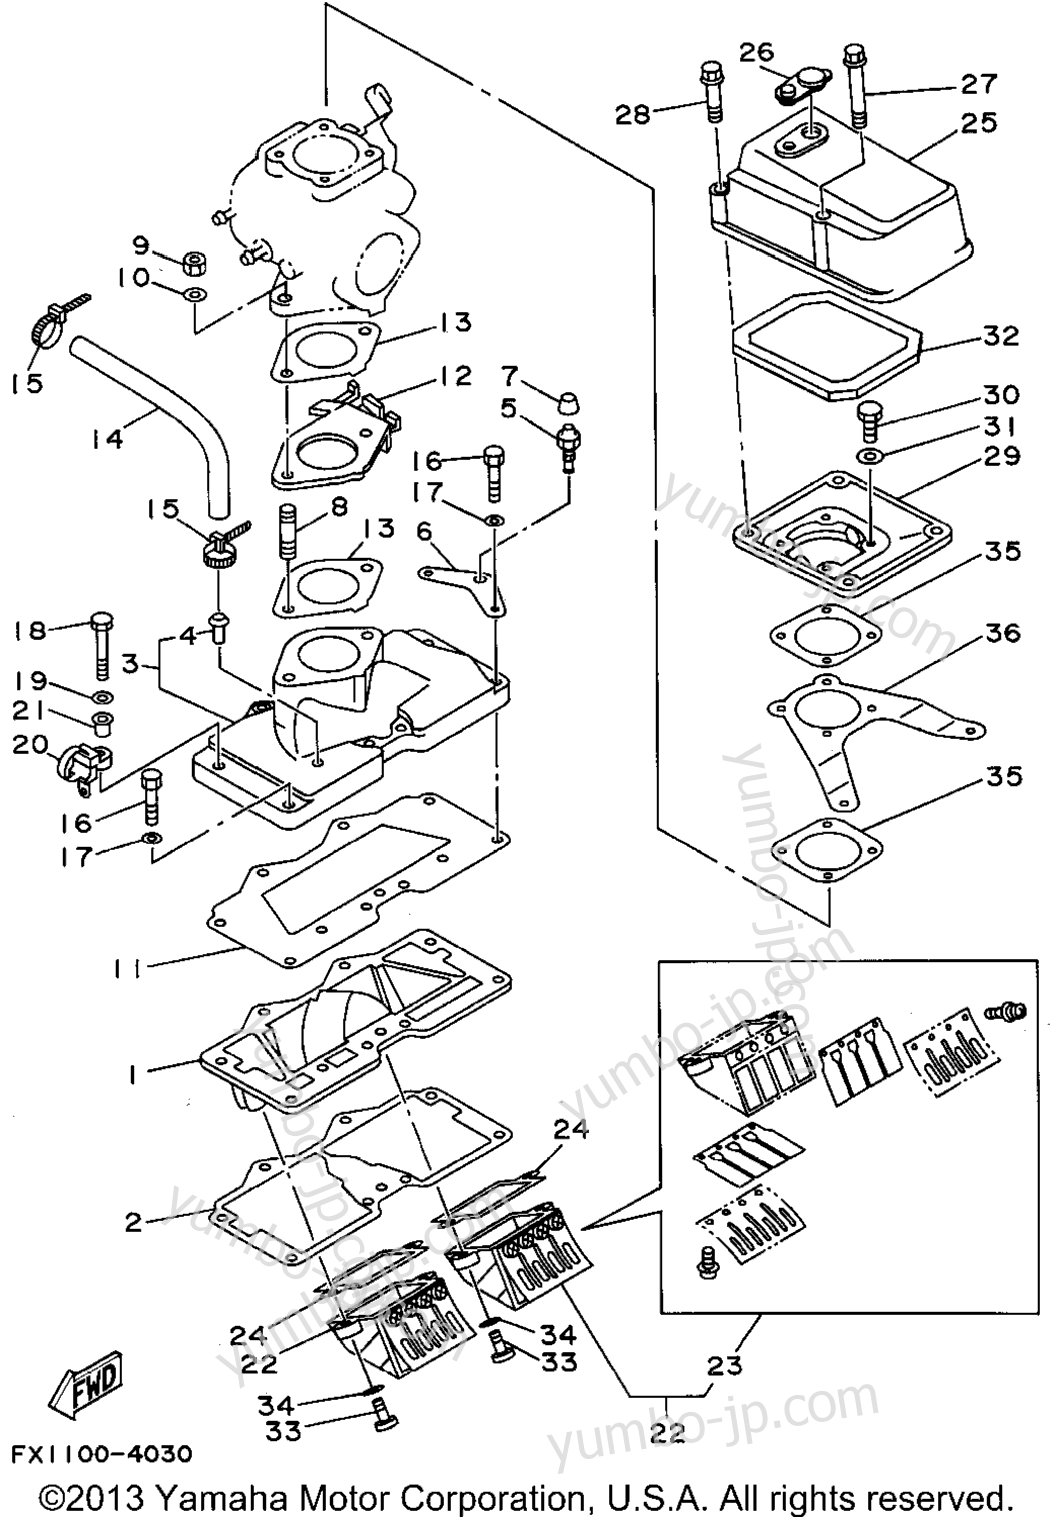 Intake для гидроциклов YAMAHA FX-1 (FX700S) 1994 г.